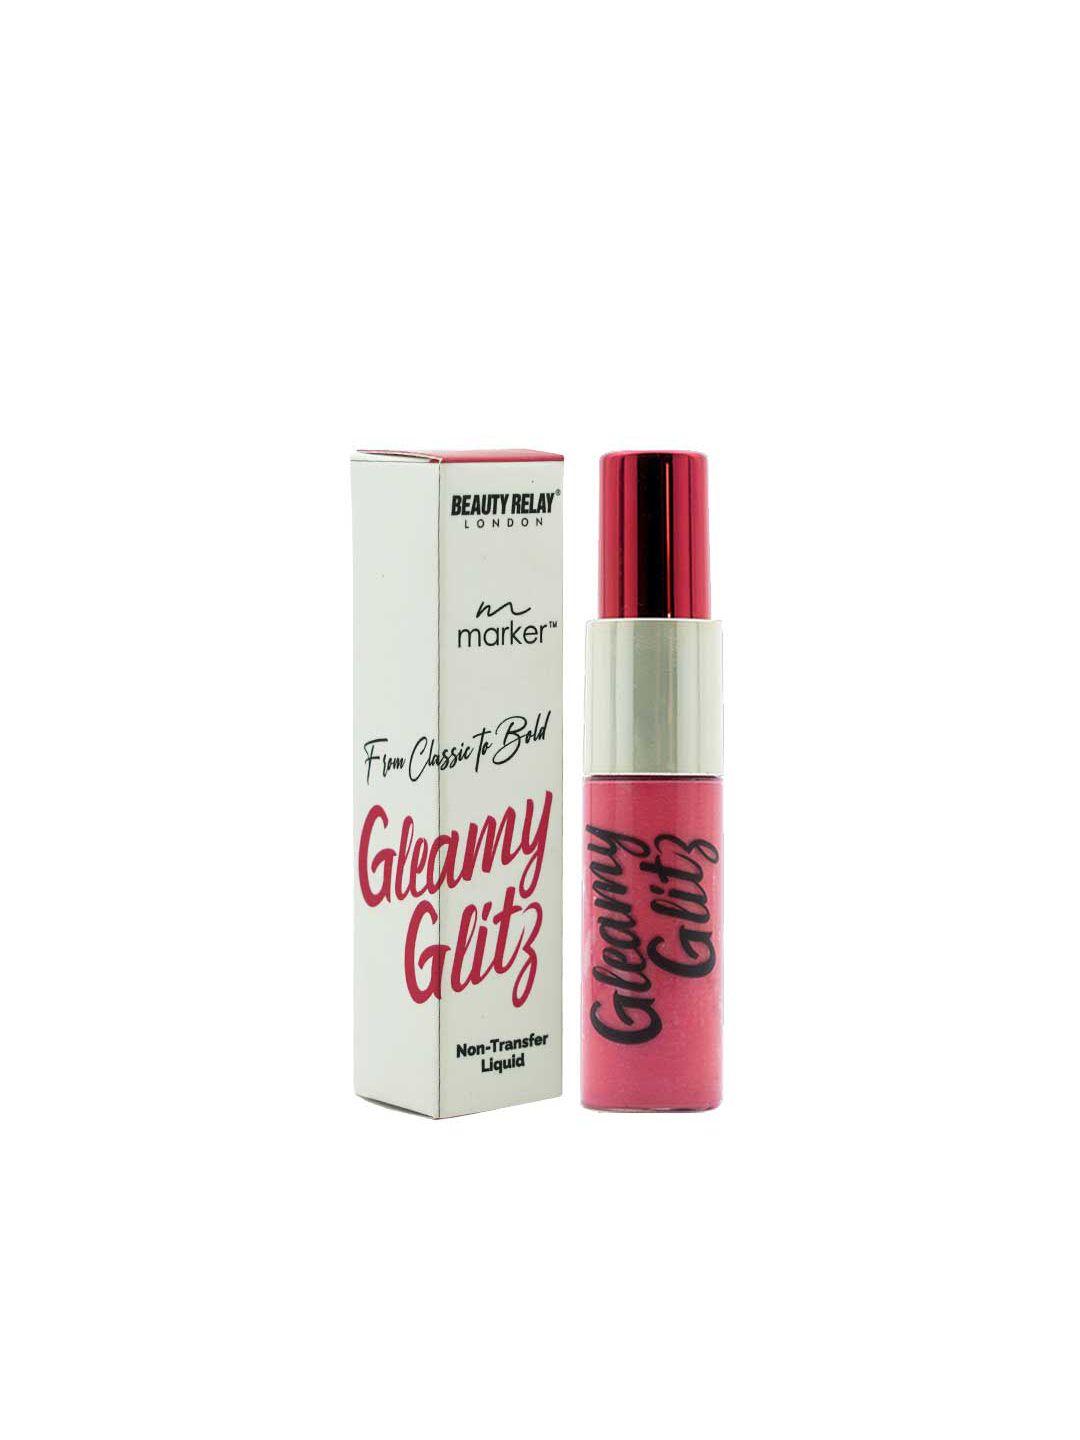 beautyrelay london gleamy glitz from classic to bold non-transfer lipstick 10g-nude pink